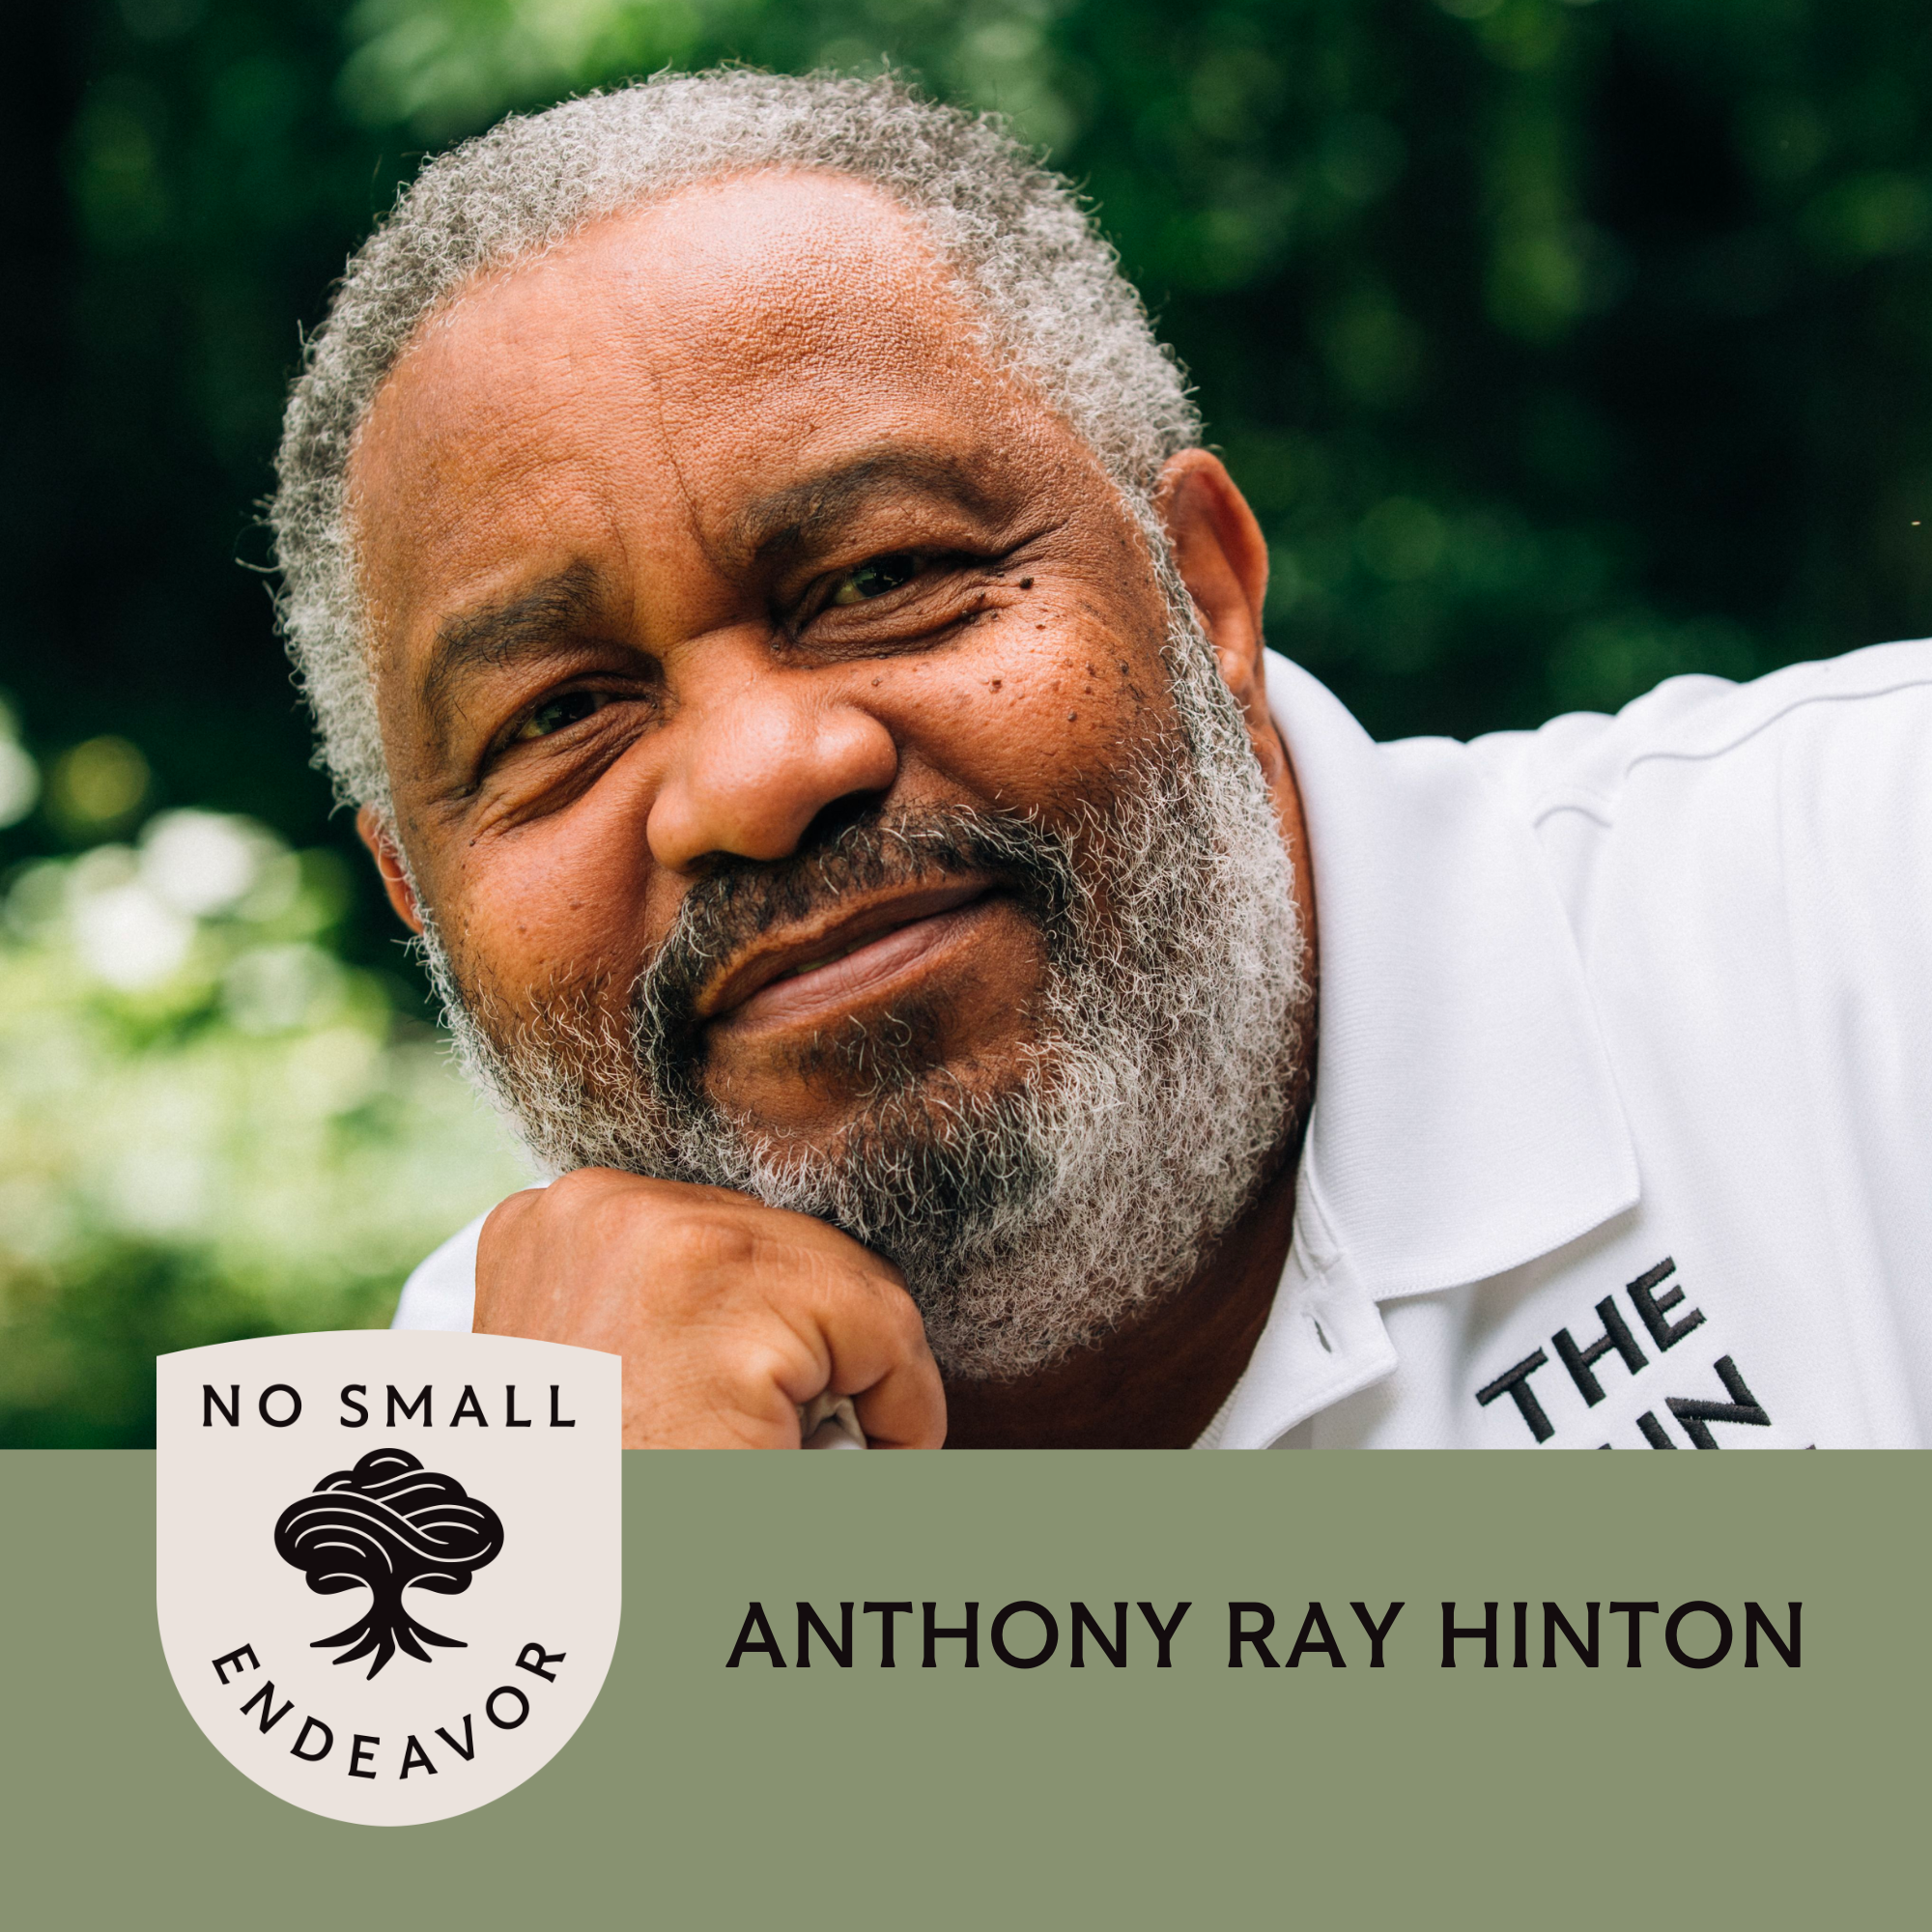 Thumbnail for "143: Anthony Ray Hinton: An Innocent Man on Death Row".